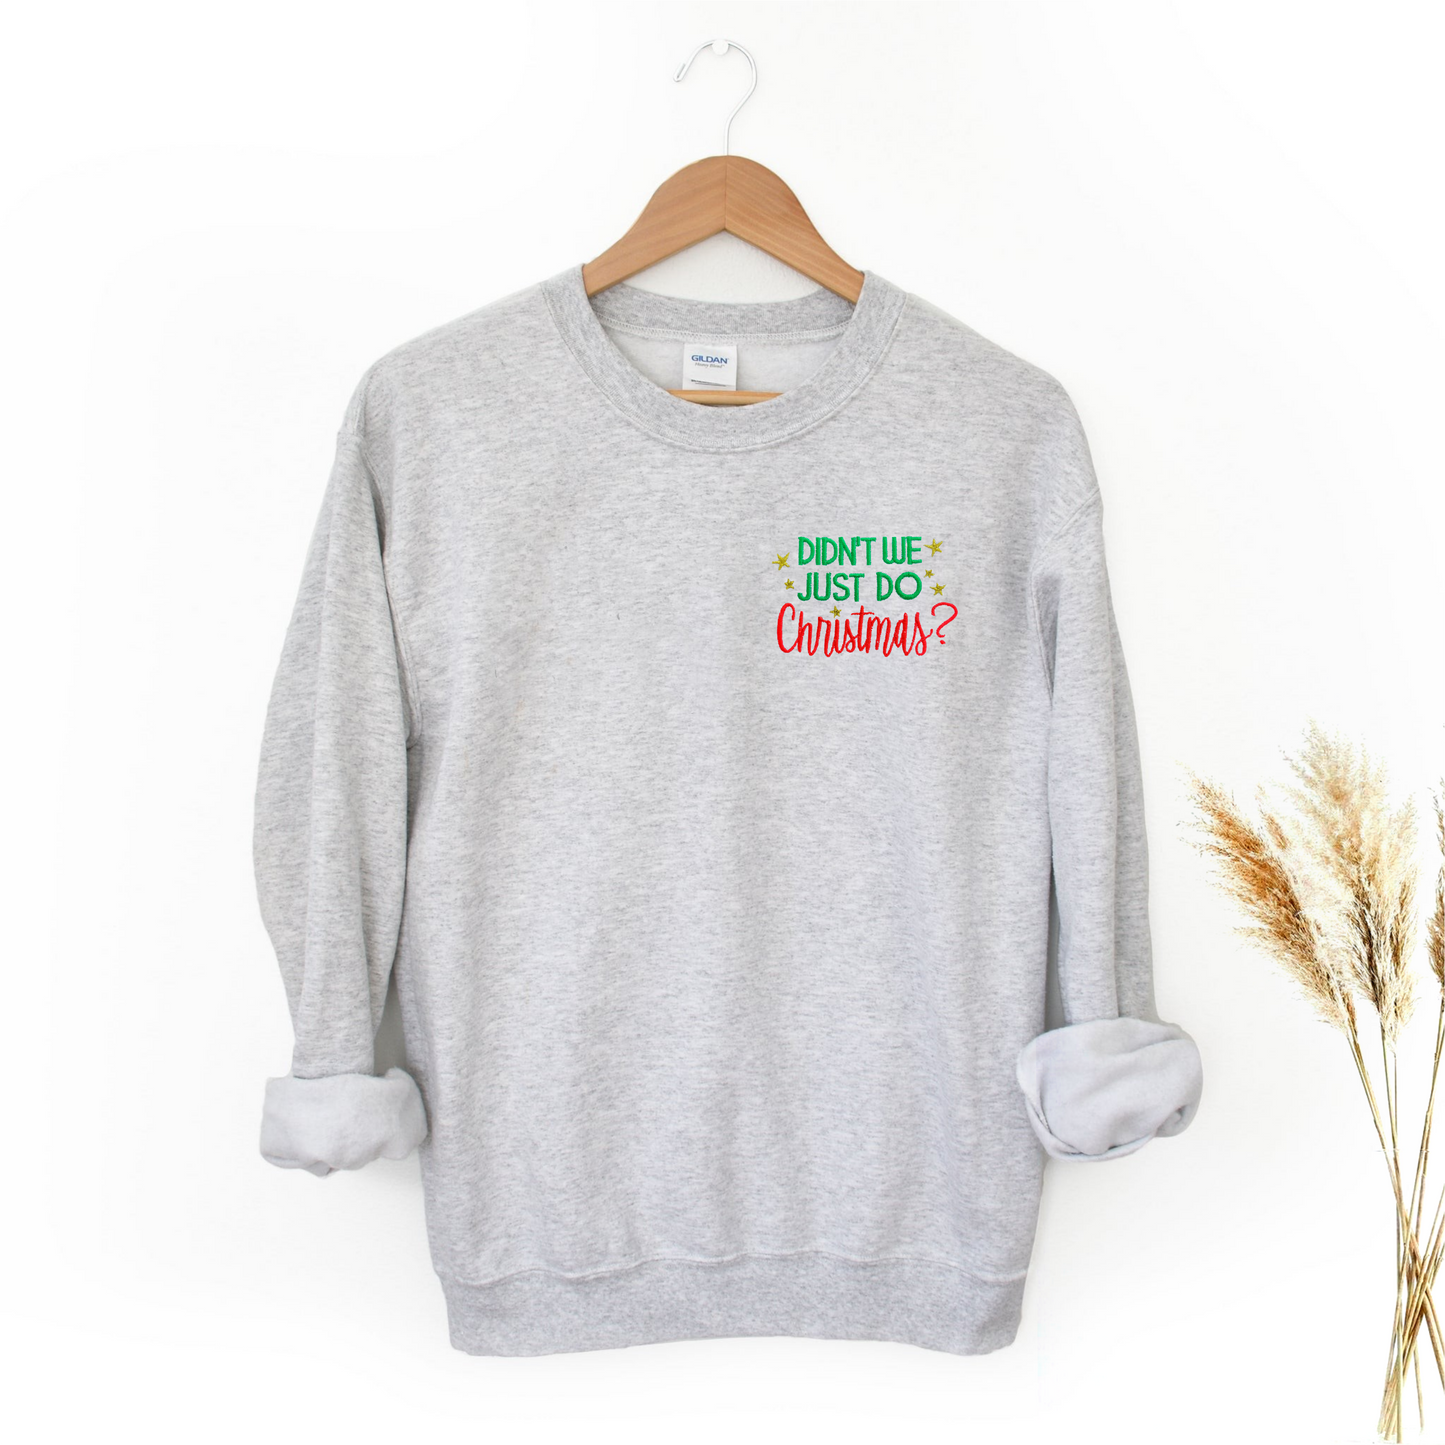 Didn't We Just Do Christmas? Embroidered Adult Unisex Crewneck Sweatshirt